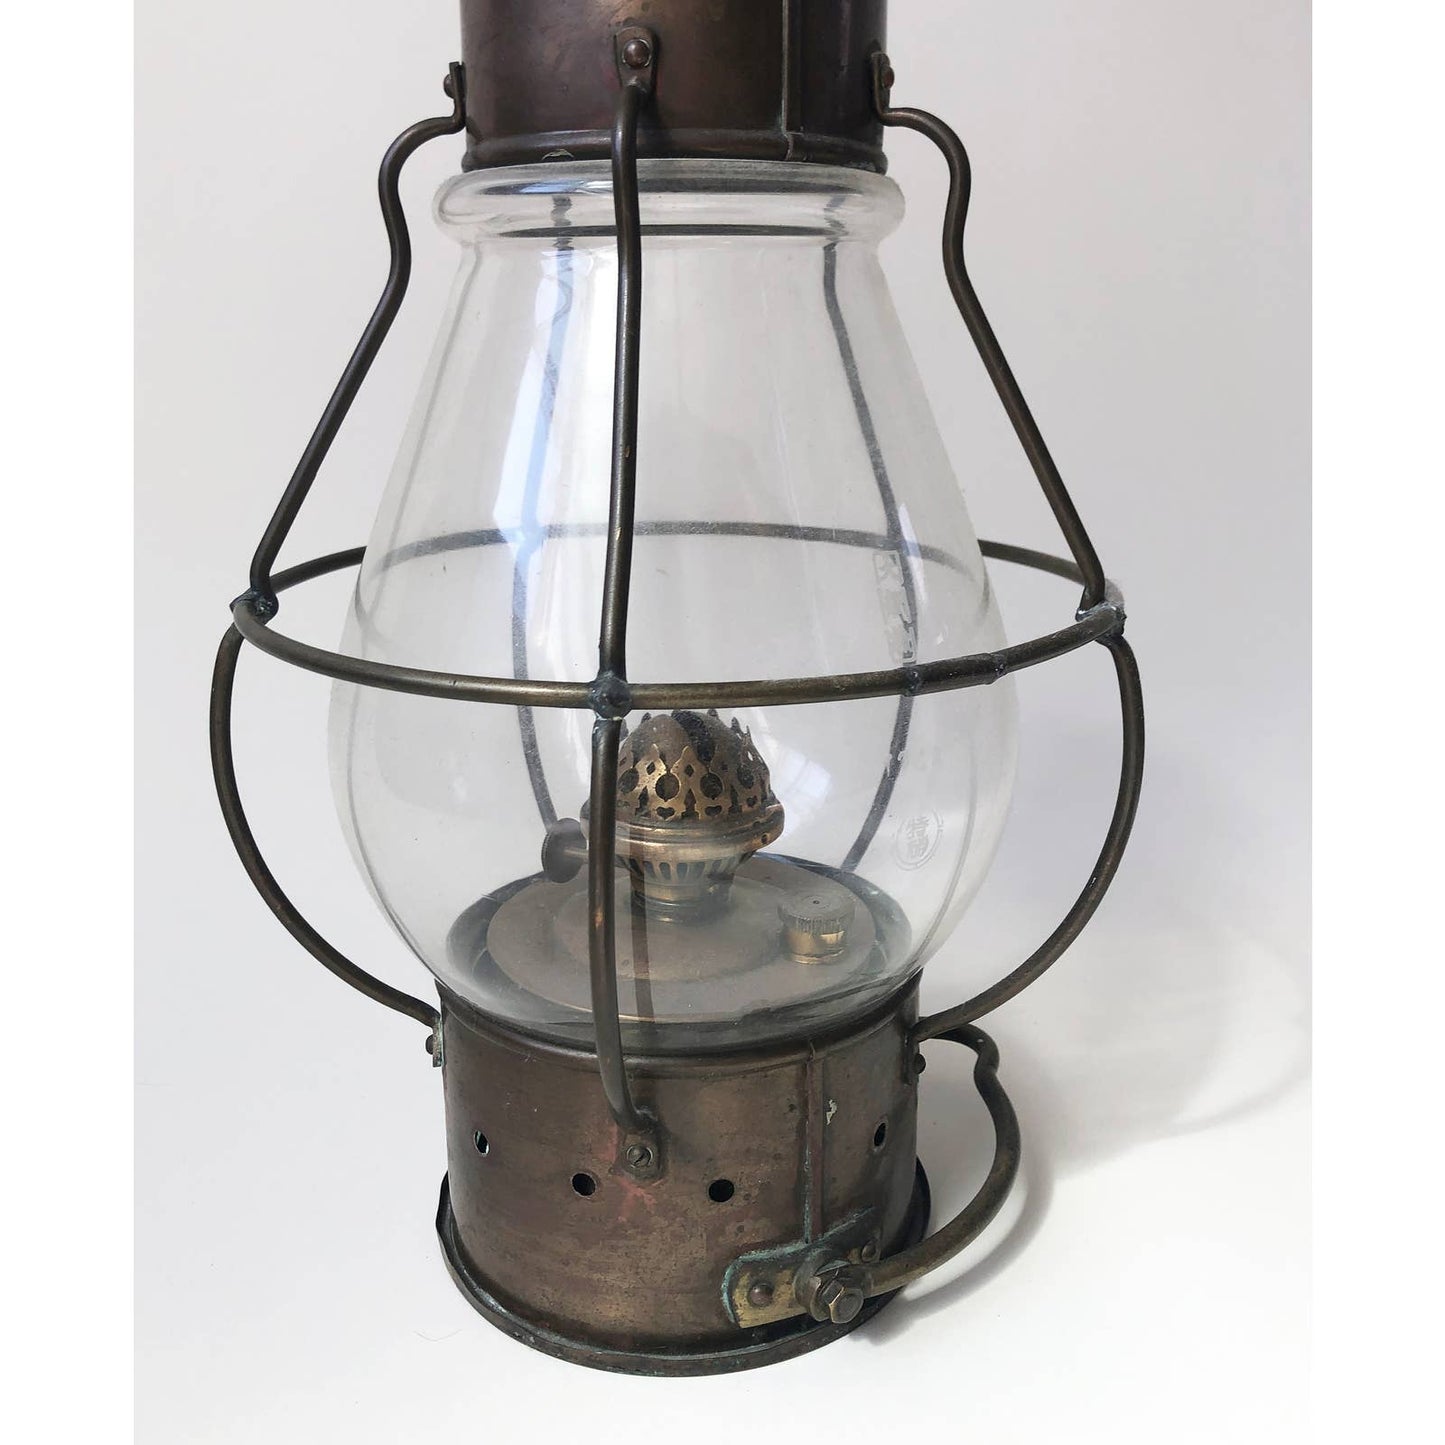 Antique Japanese Brass Oil Lamp